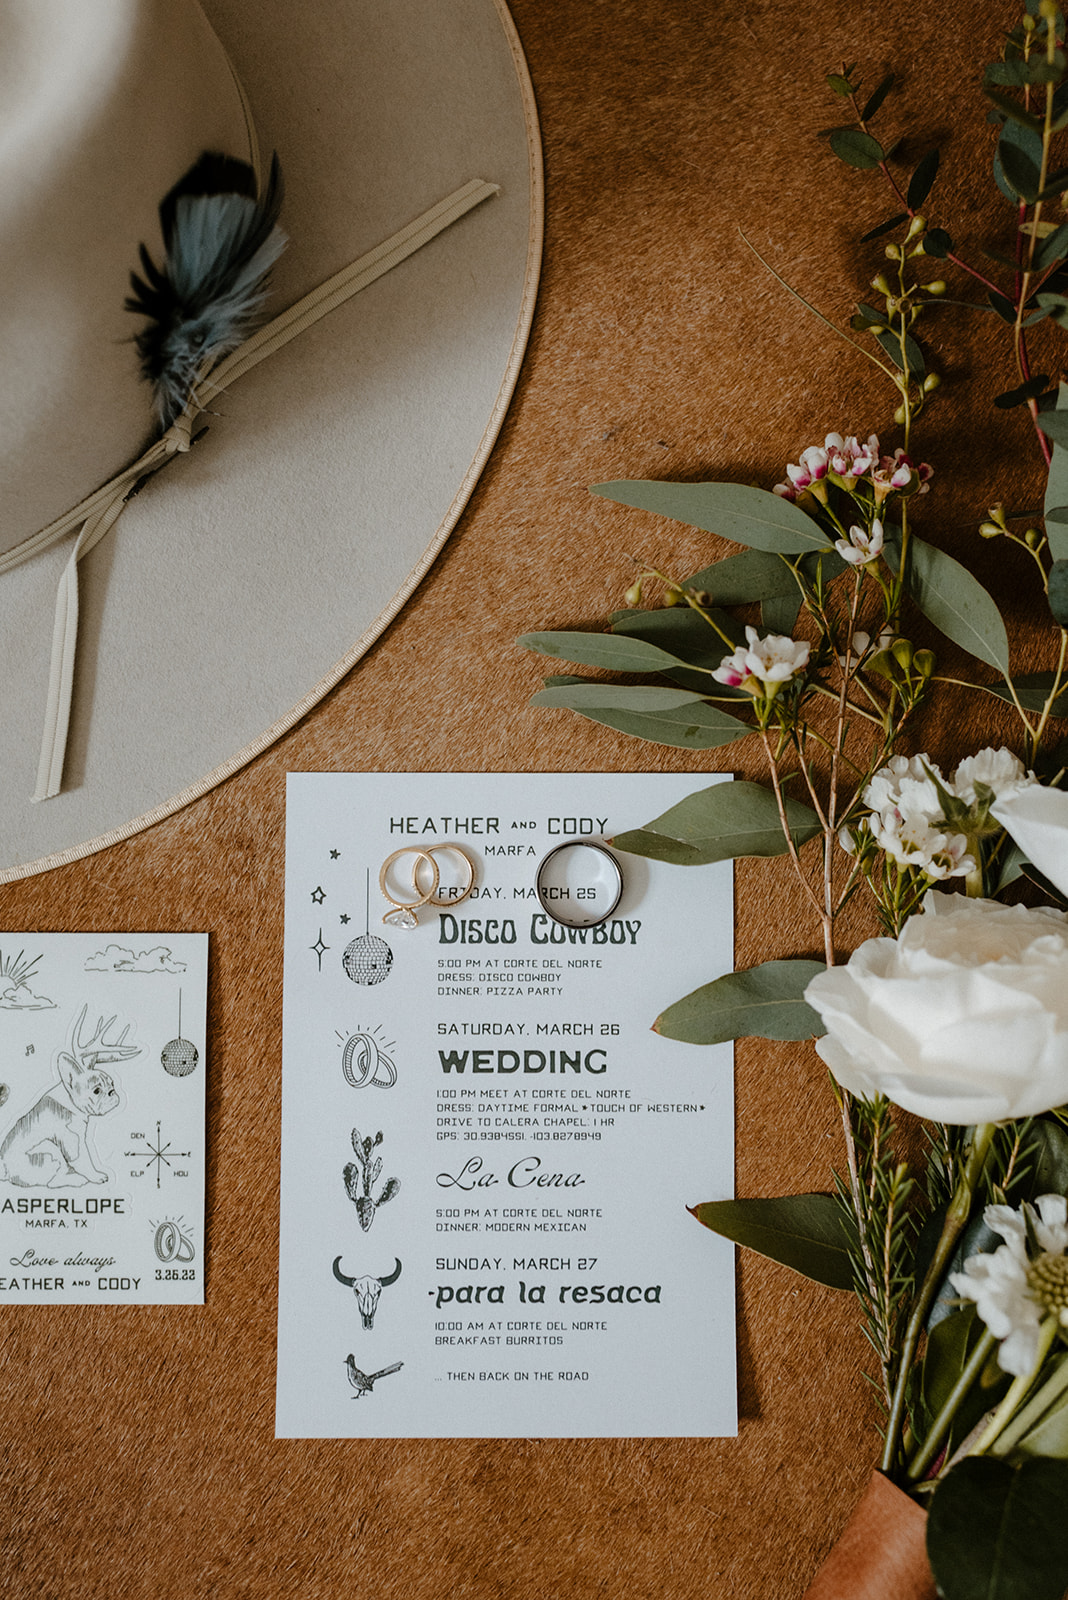 Marfa Texas small wedding details